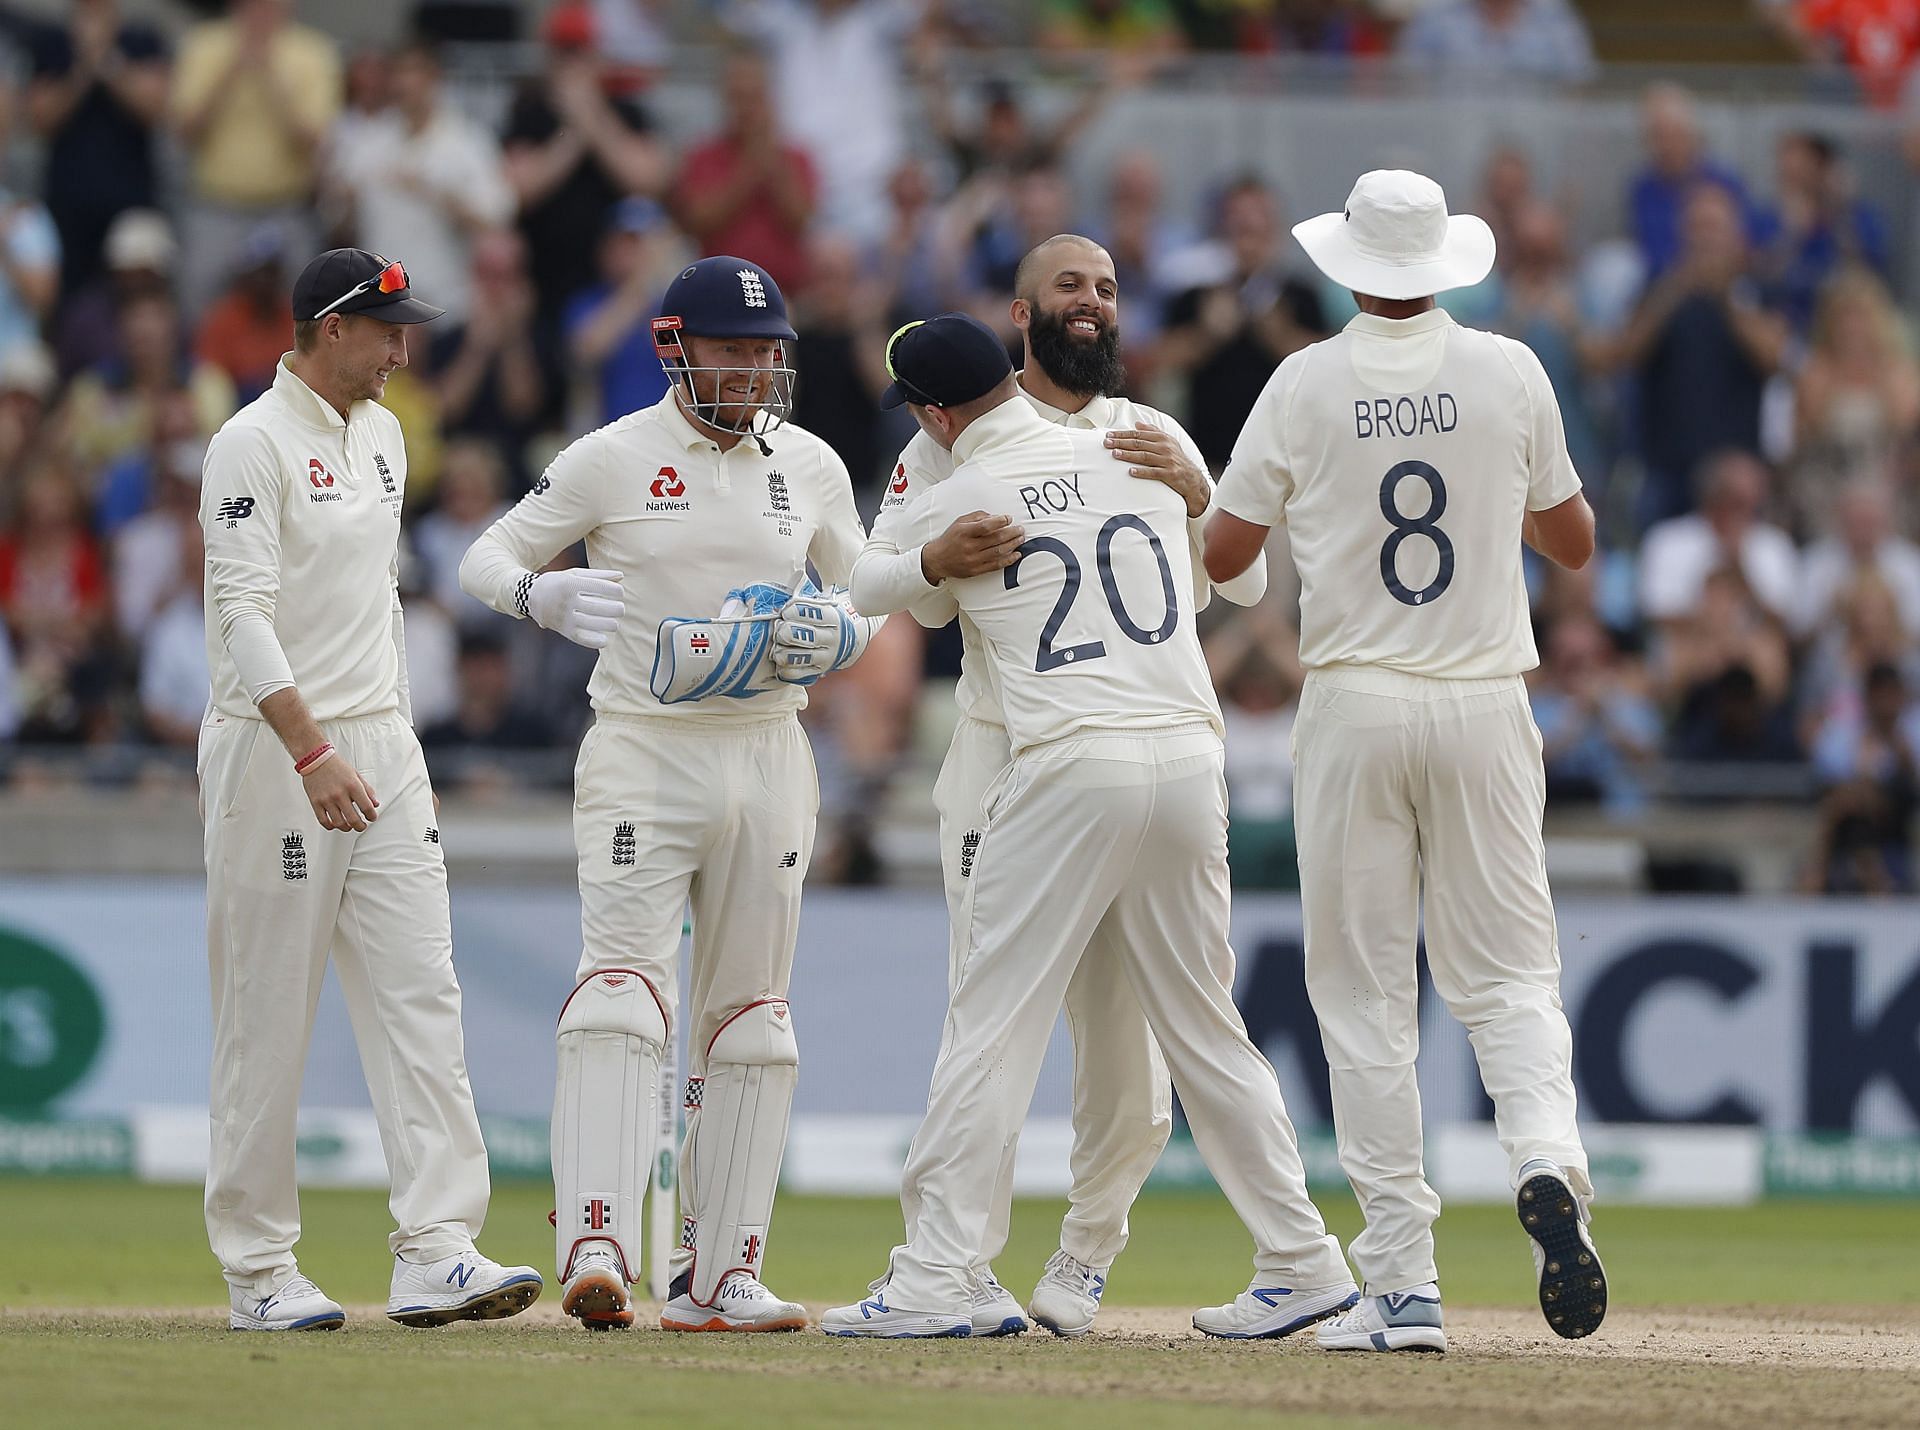 England v Australia - 1st Specsavers Ashes Test: Day Three